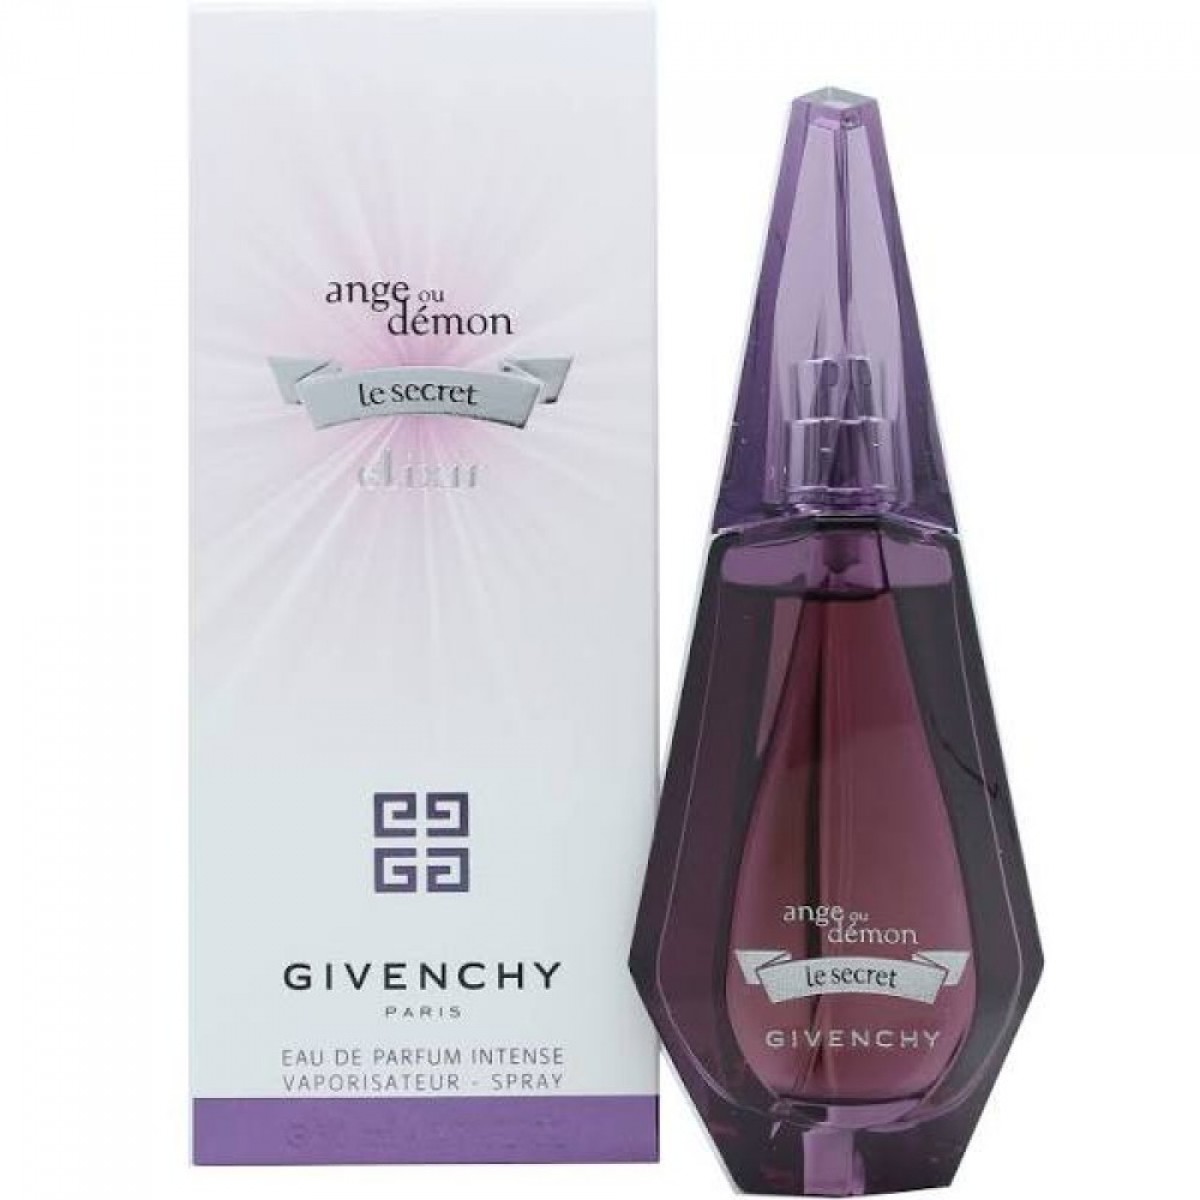 Ange ou Demon Le Secret Elixir Givenchy Perfume